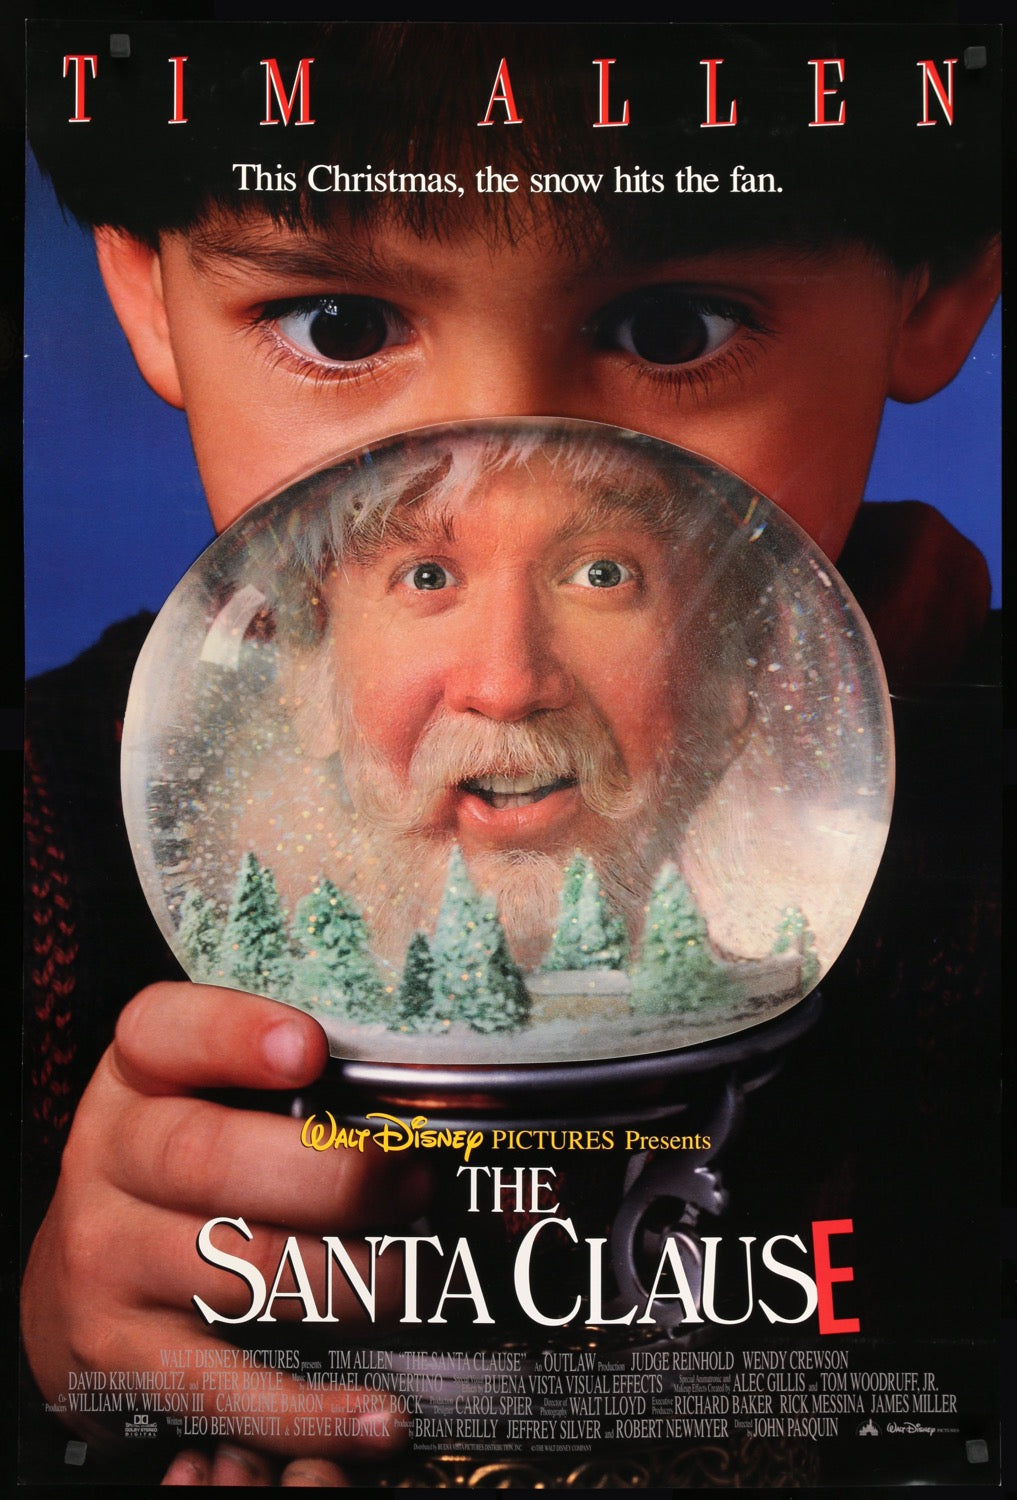 Santa Clause (1994) original movie poster for sale at Original Film Art